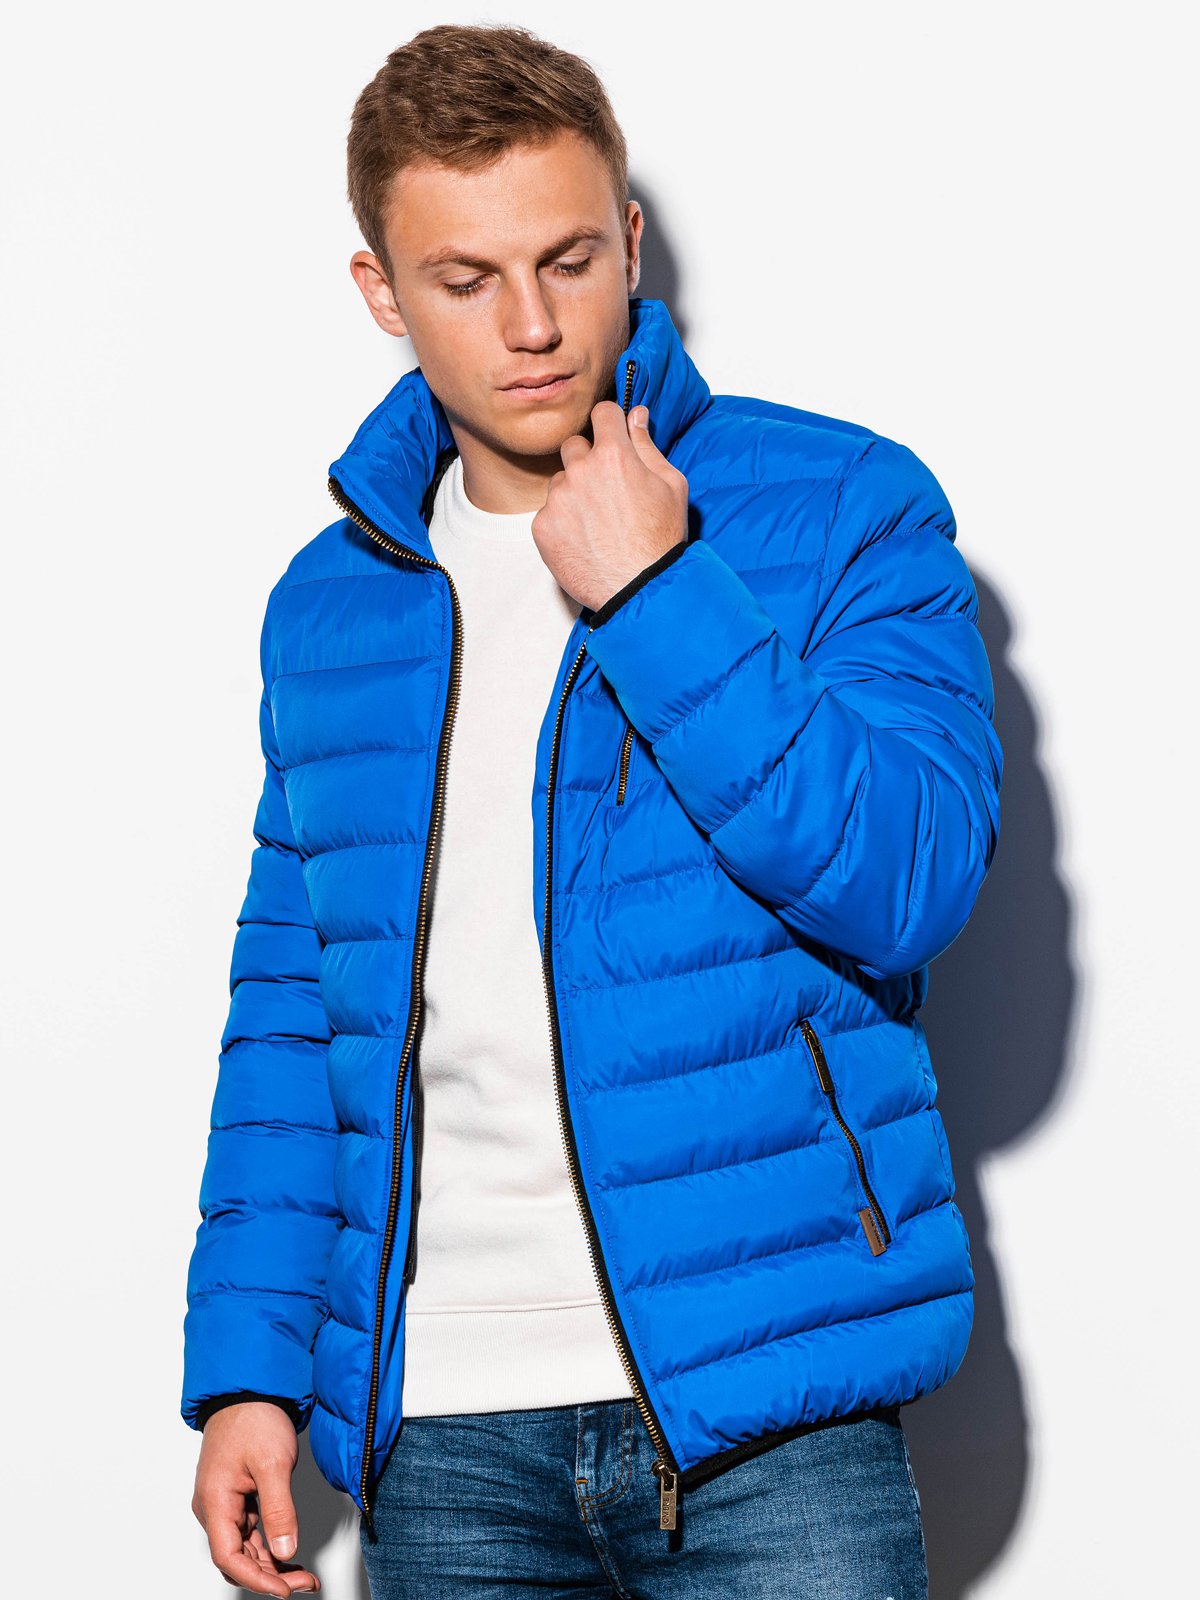 Men's mid-season quilted jacket C384 - blue | MODONE wholesale ...